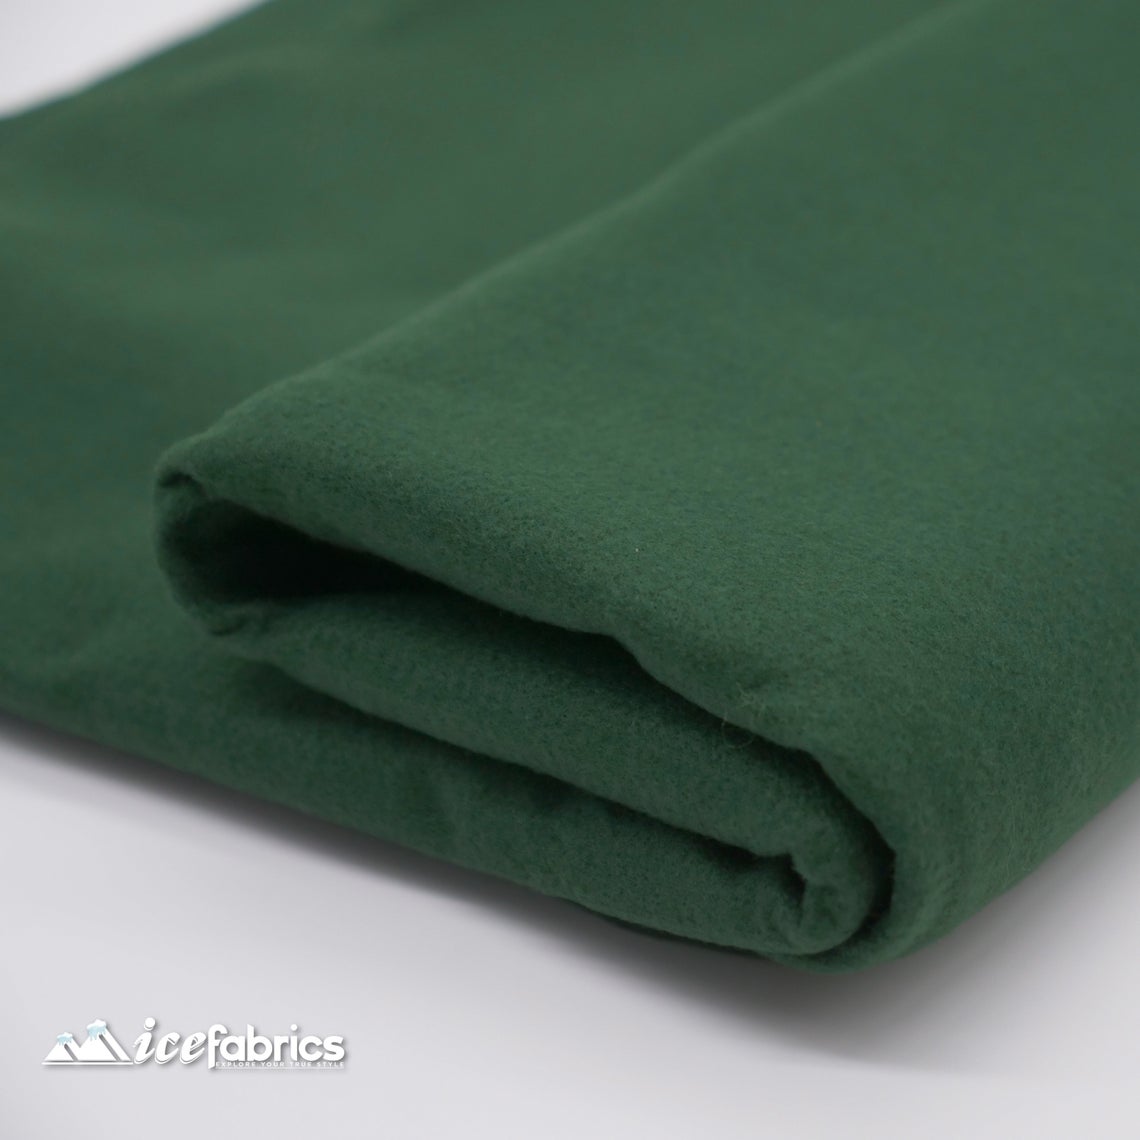 Acrylic Felt Fabric By The Roll | 20 yards | Wholesale Fabric ICE FABRICS Hunter Green